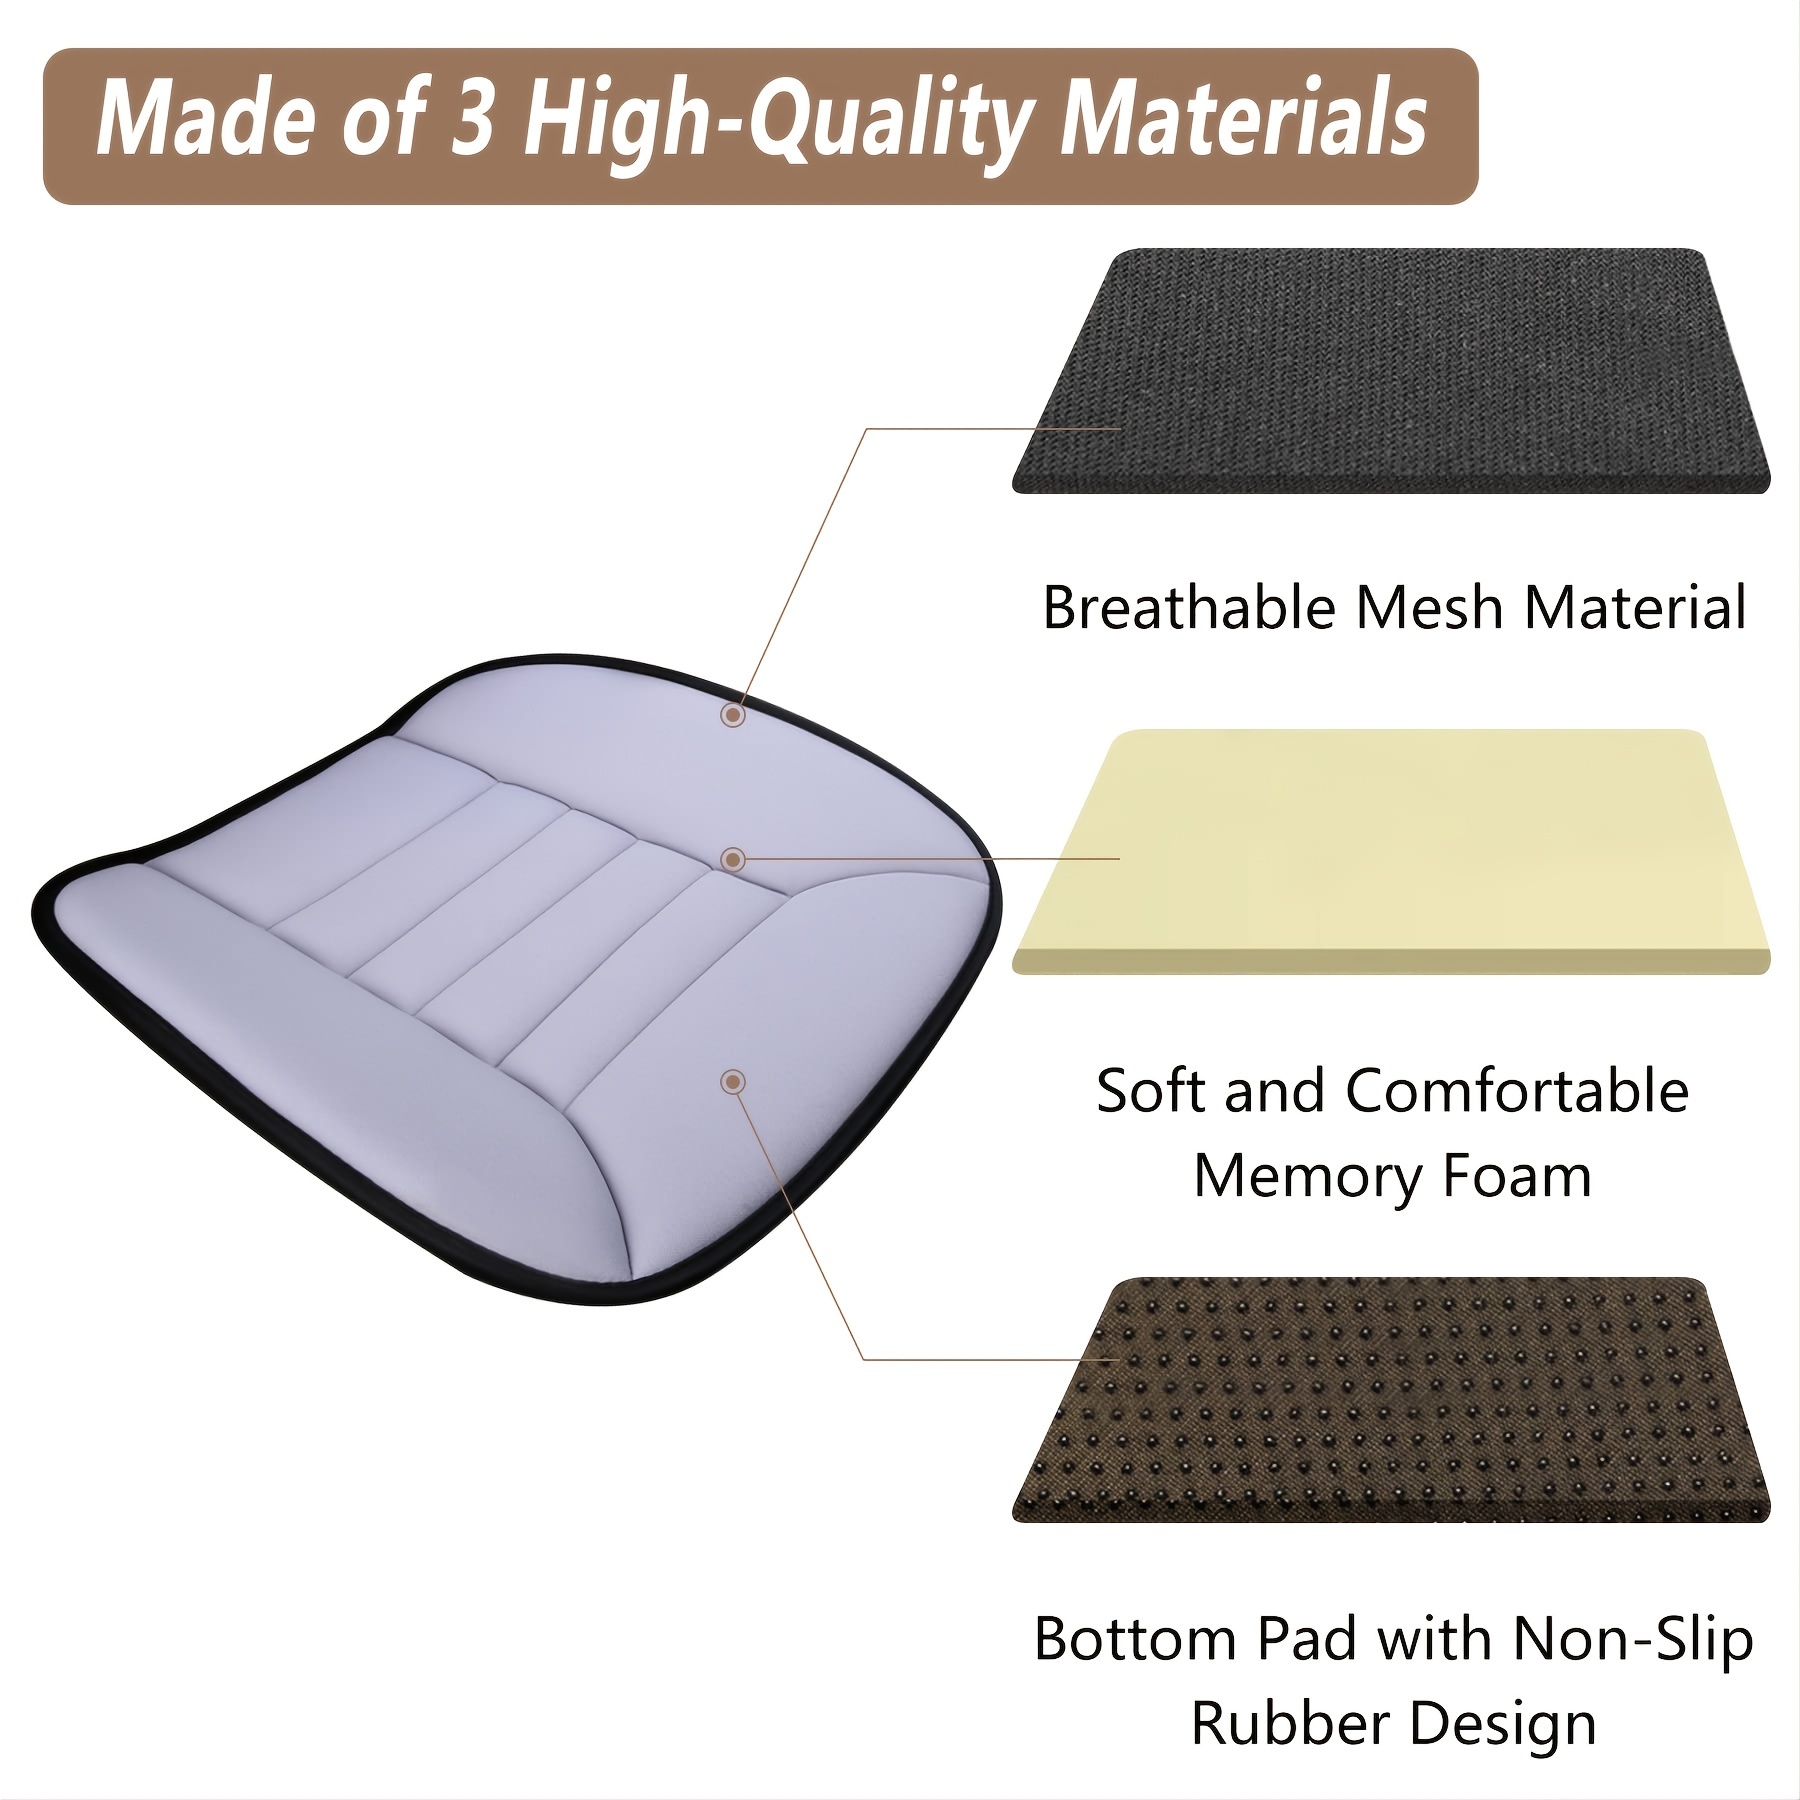 Car Seat Memory Foam Non-slip Cushion Pad Inventories Adjustable